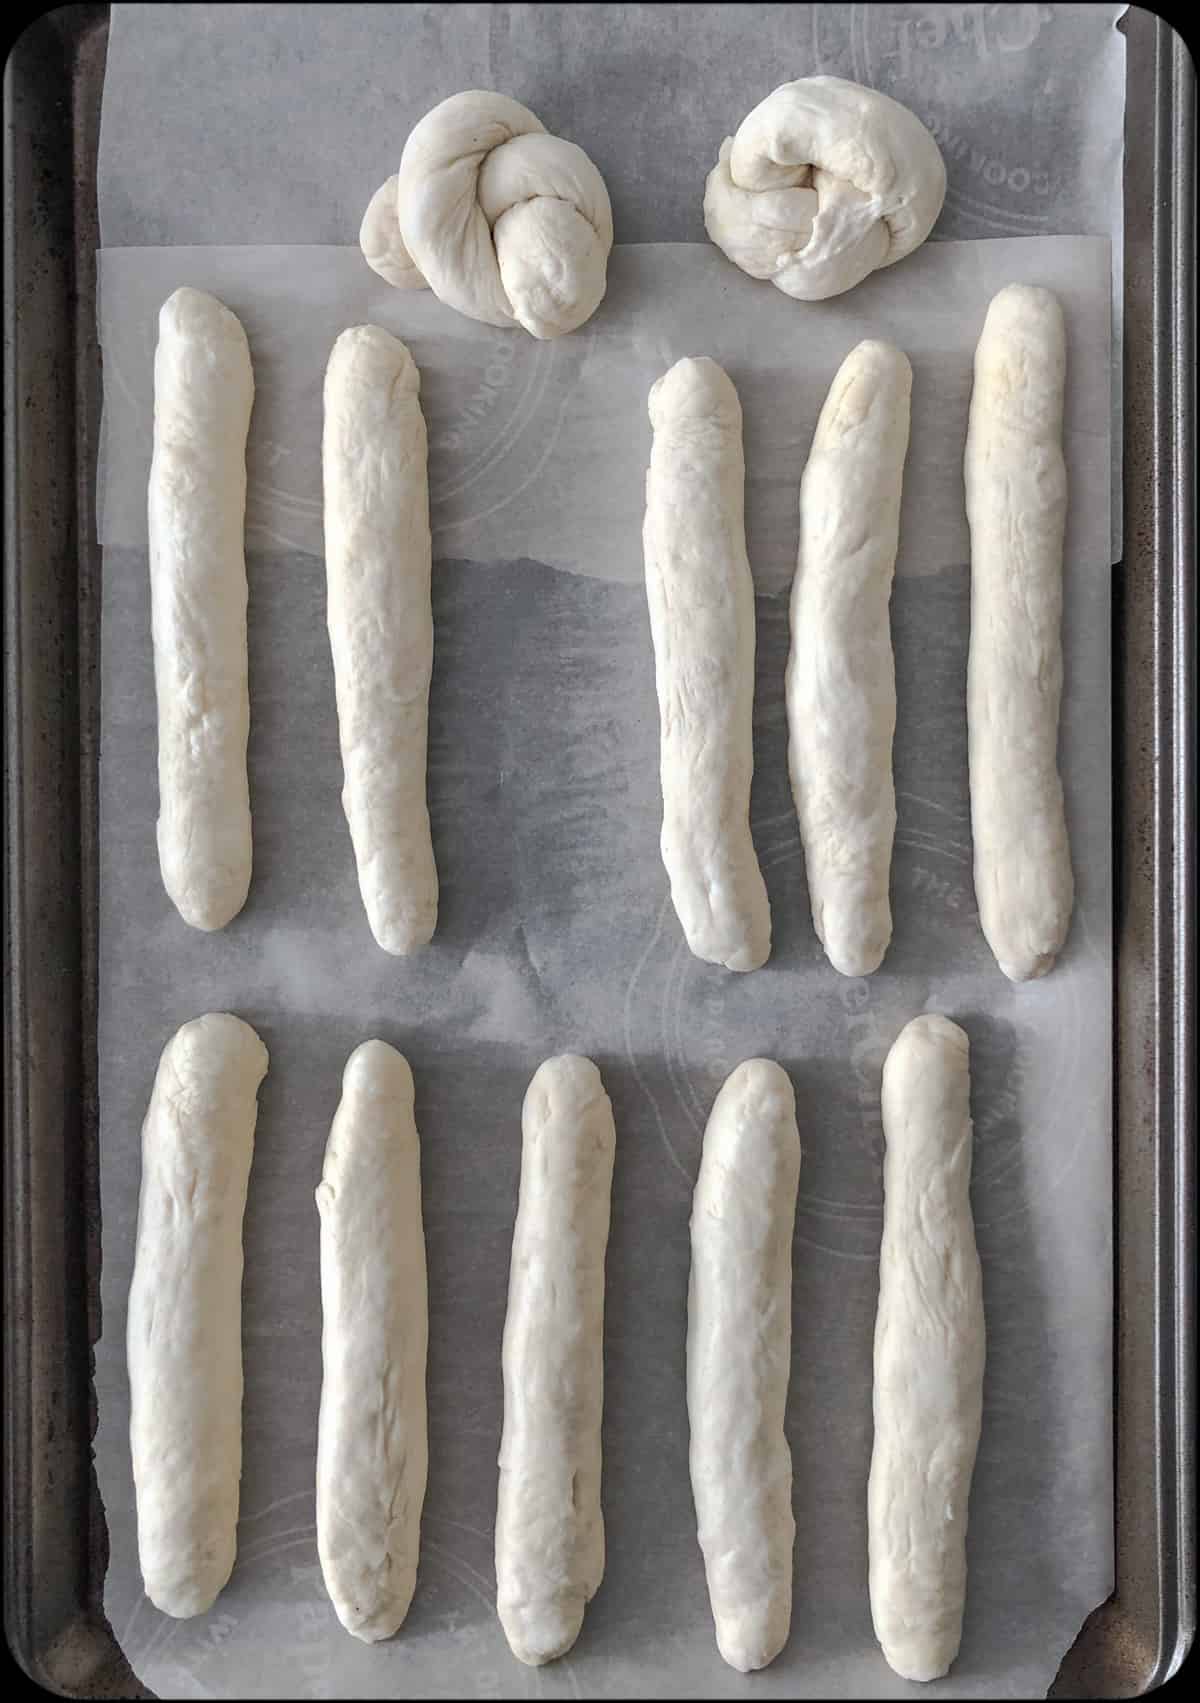 Baking sheet of hand rolled breadsticks.